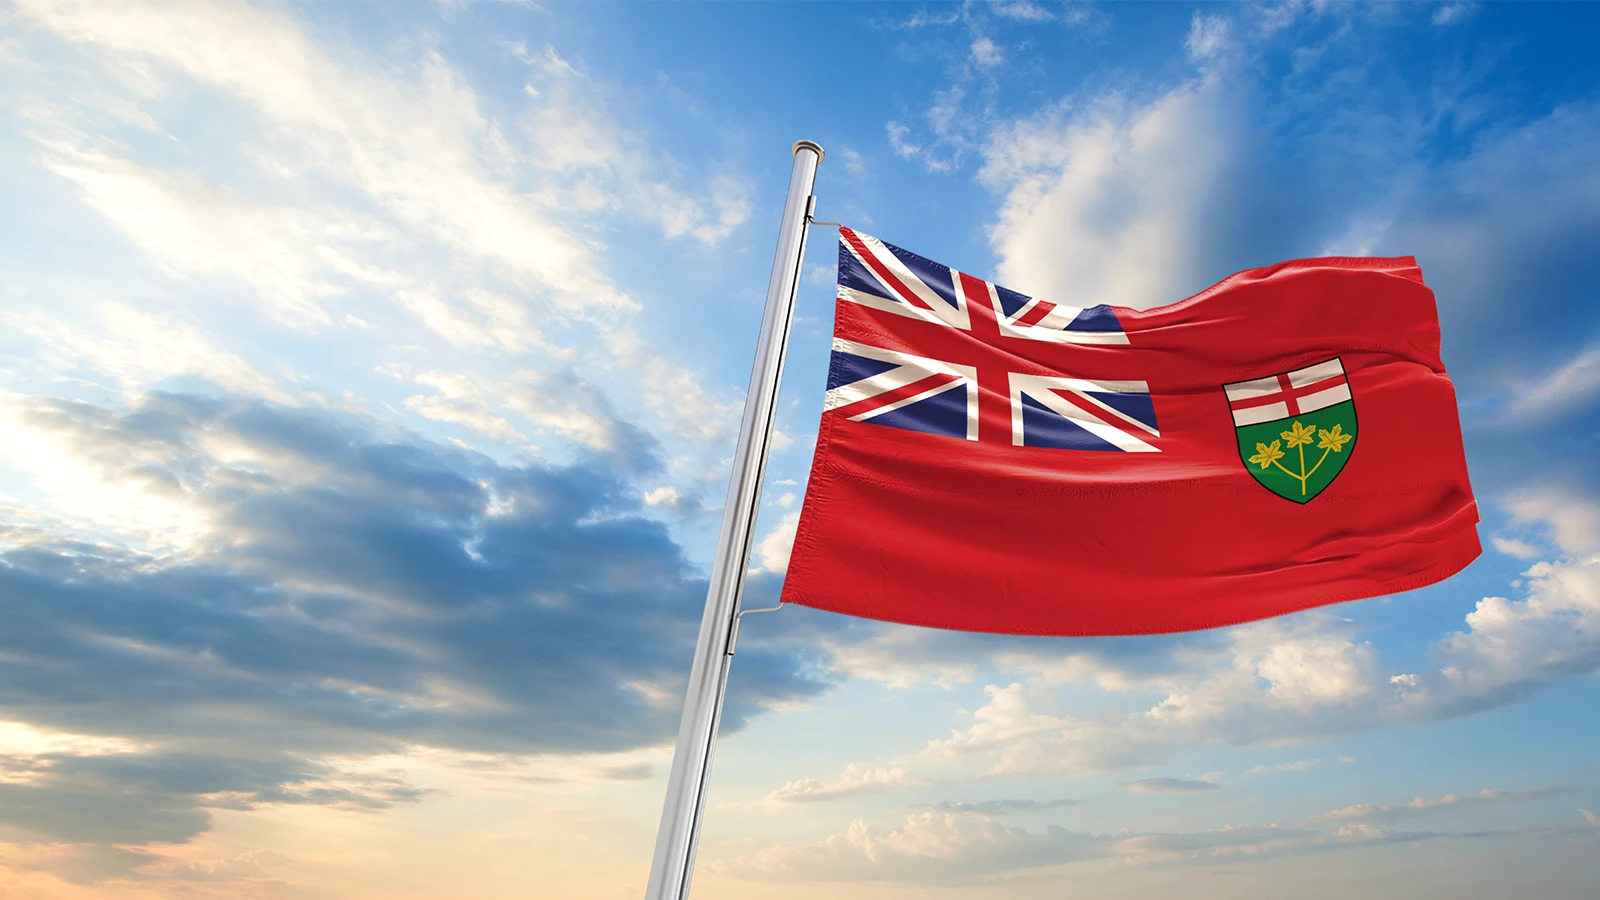 Ontario flag flying high above a blue sky